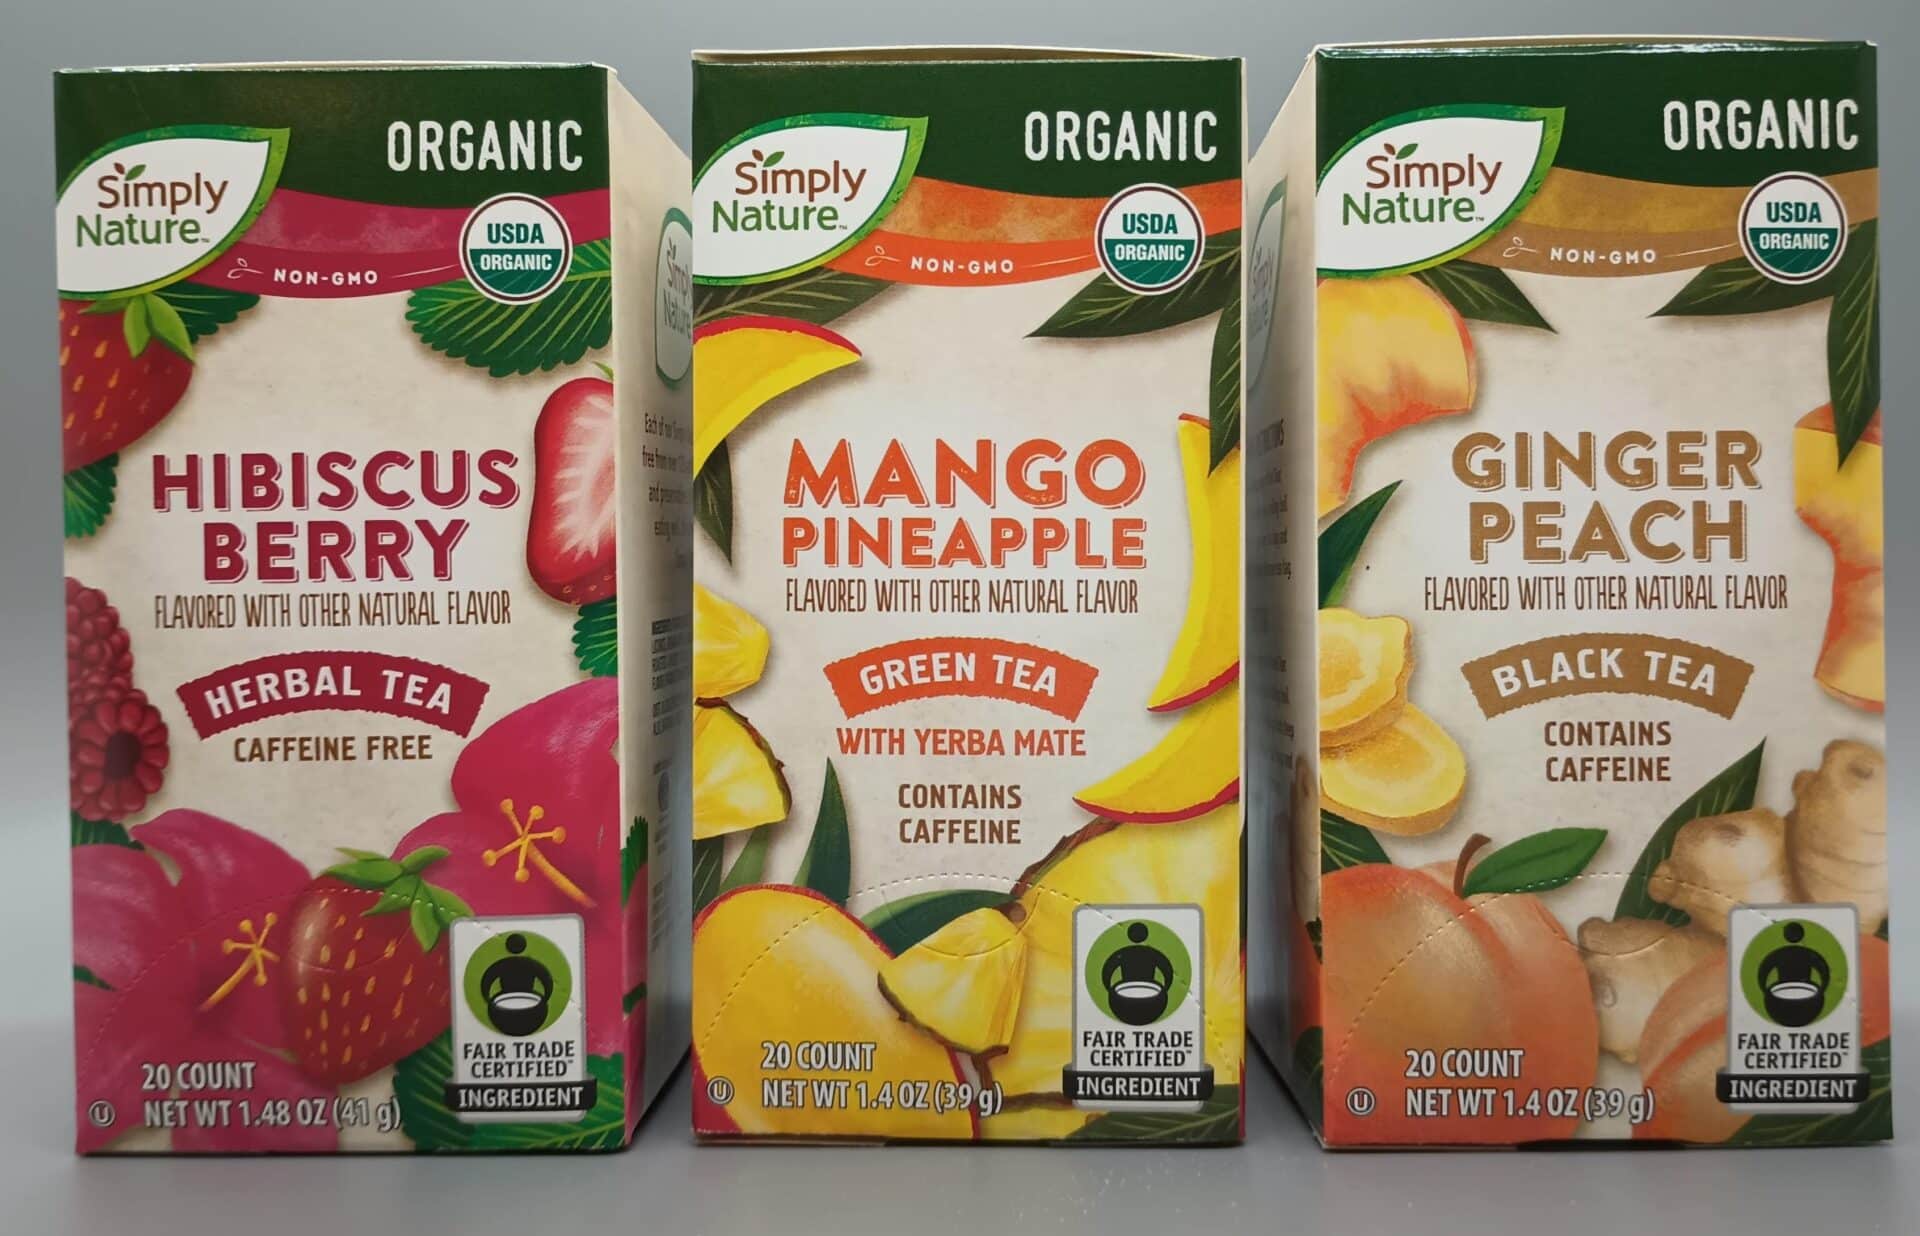 Simply Nature Organic Fair Trade Tea